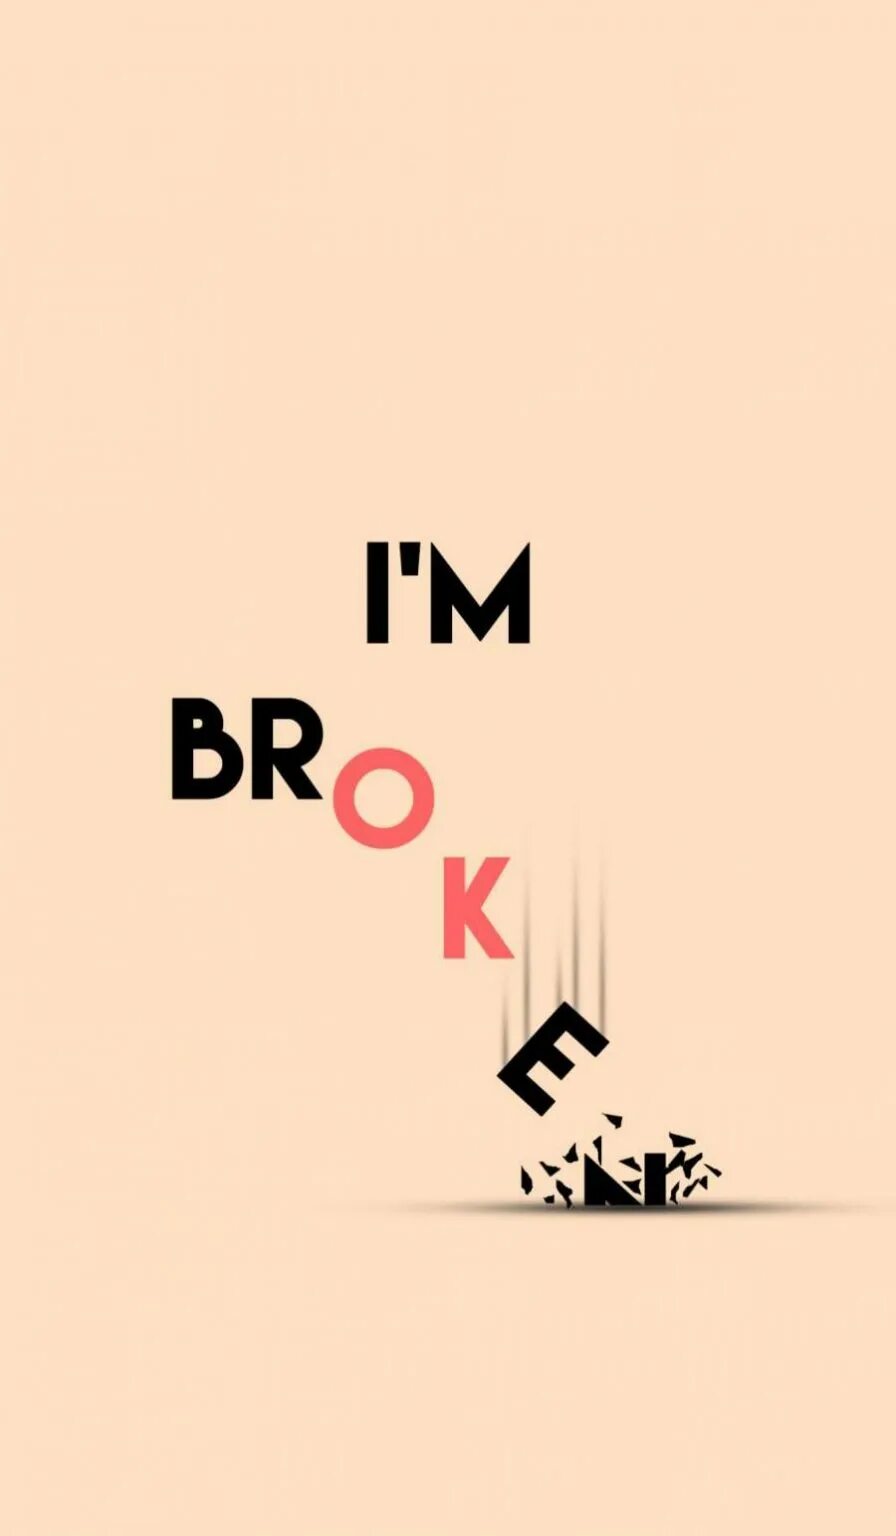 L am broken. I M broken обои. Обои i am ok. Обои на телефон im ok. I'M broken обои на телефон.